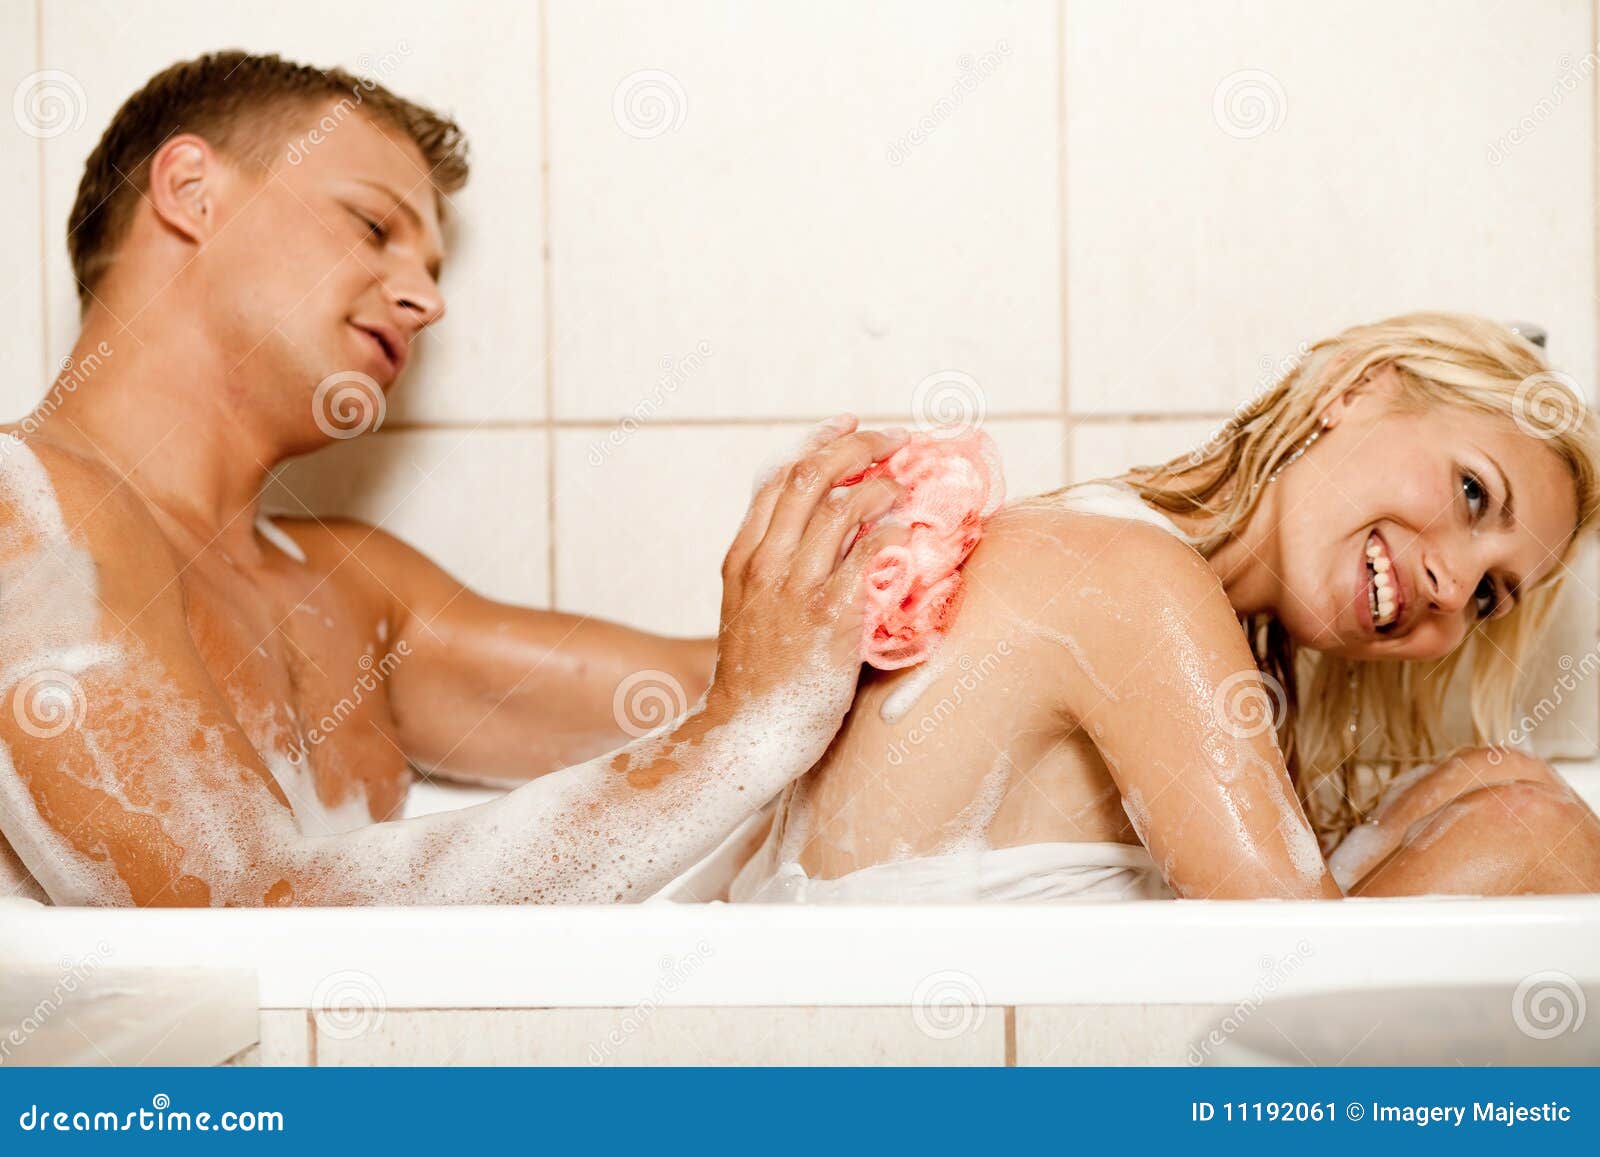 Man bathing his wife stock image